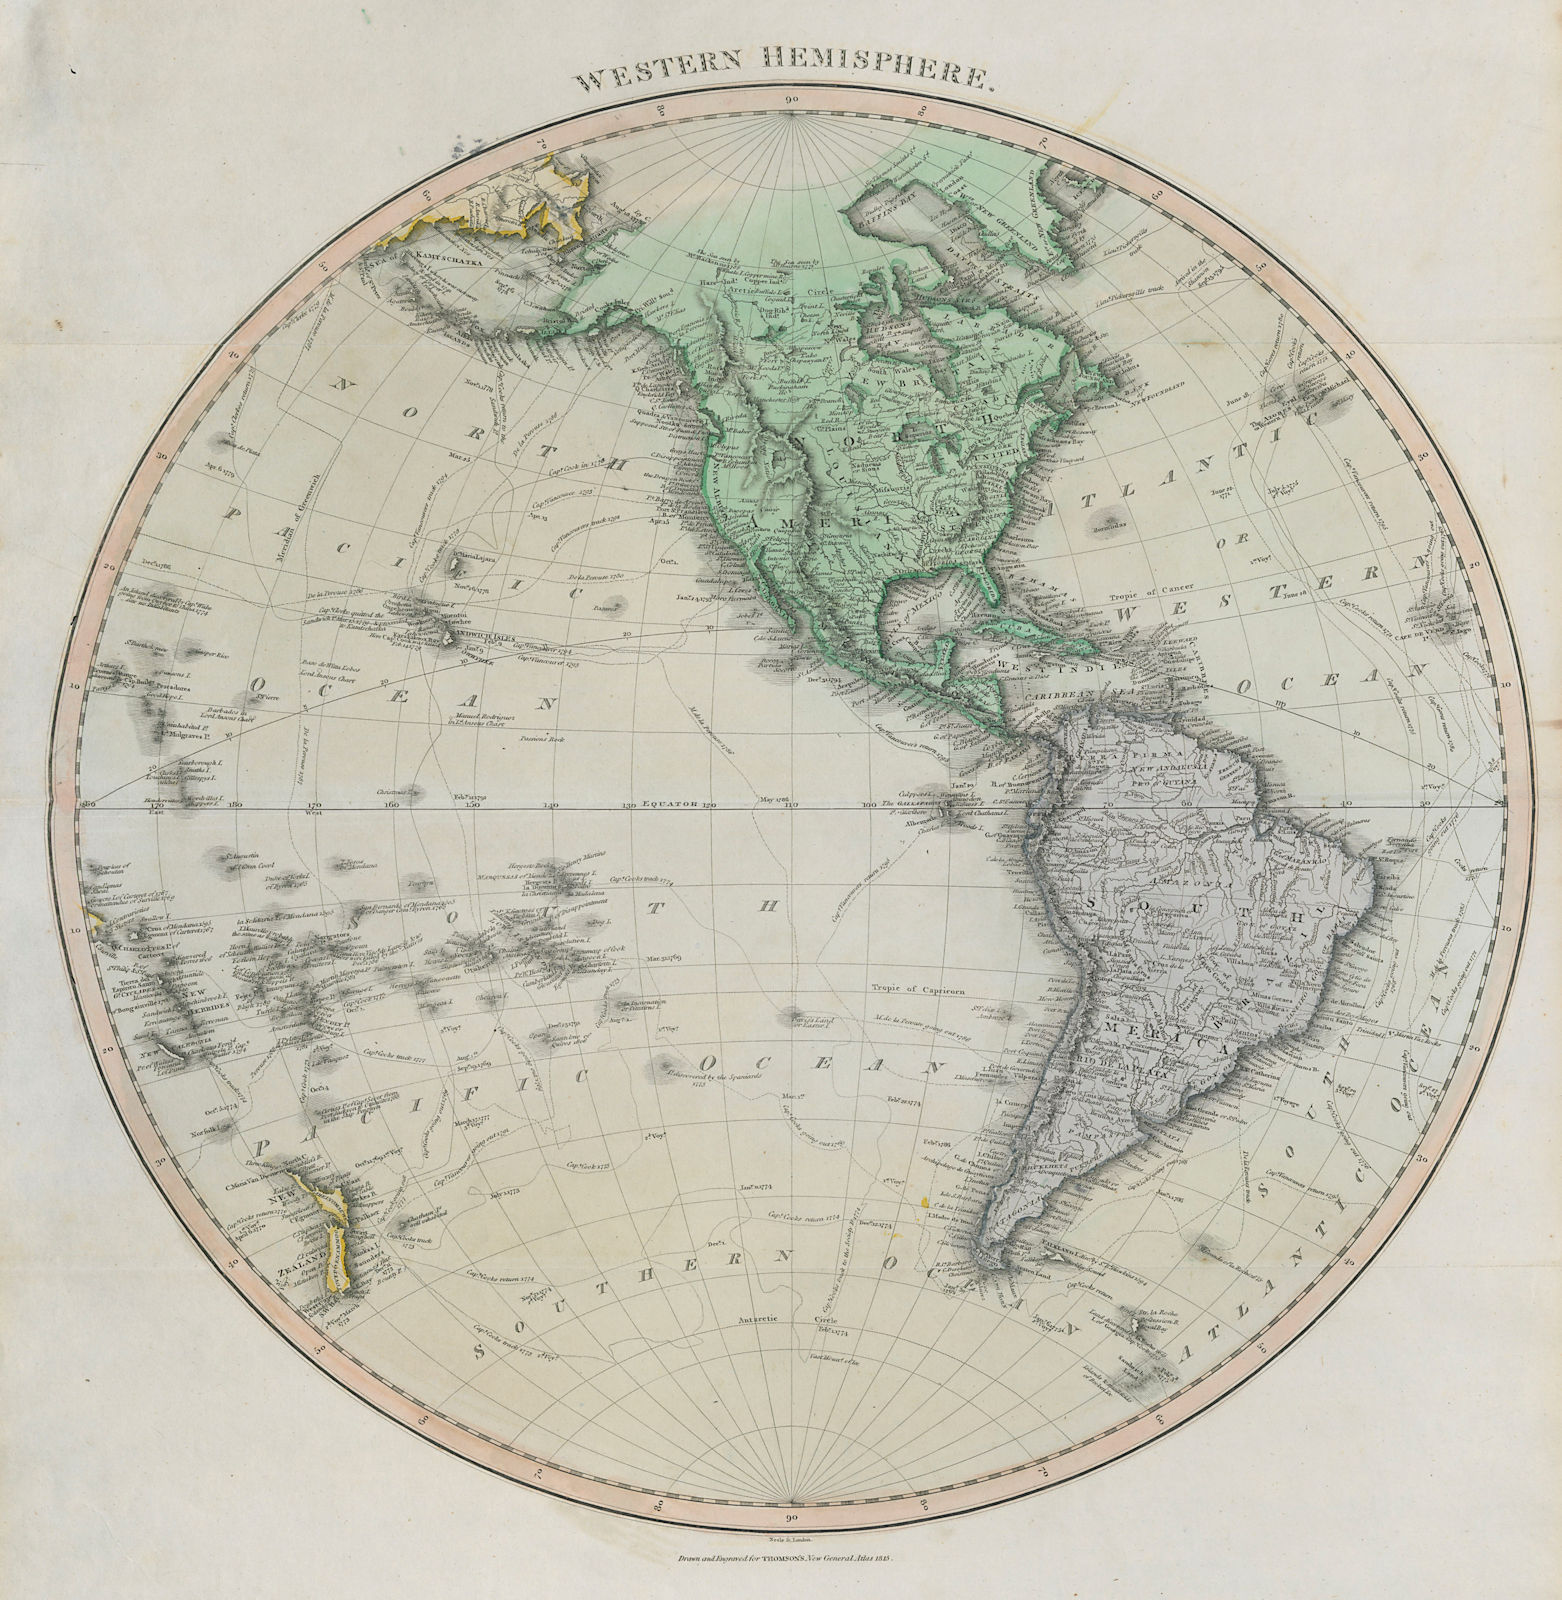 Associate Product "Western hemisphere". North / South America. Polynesia. THOMSON 1817 old map